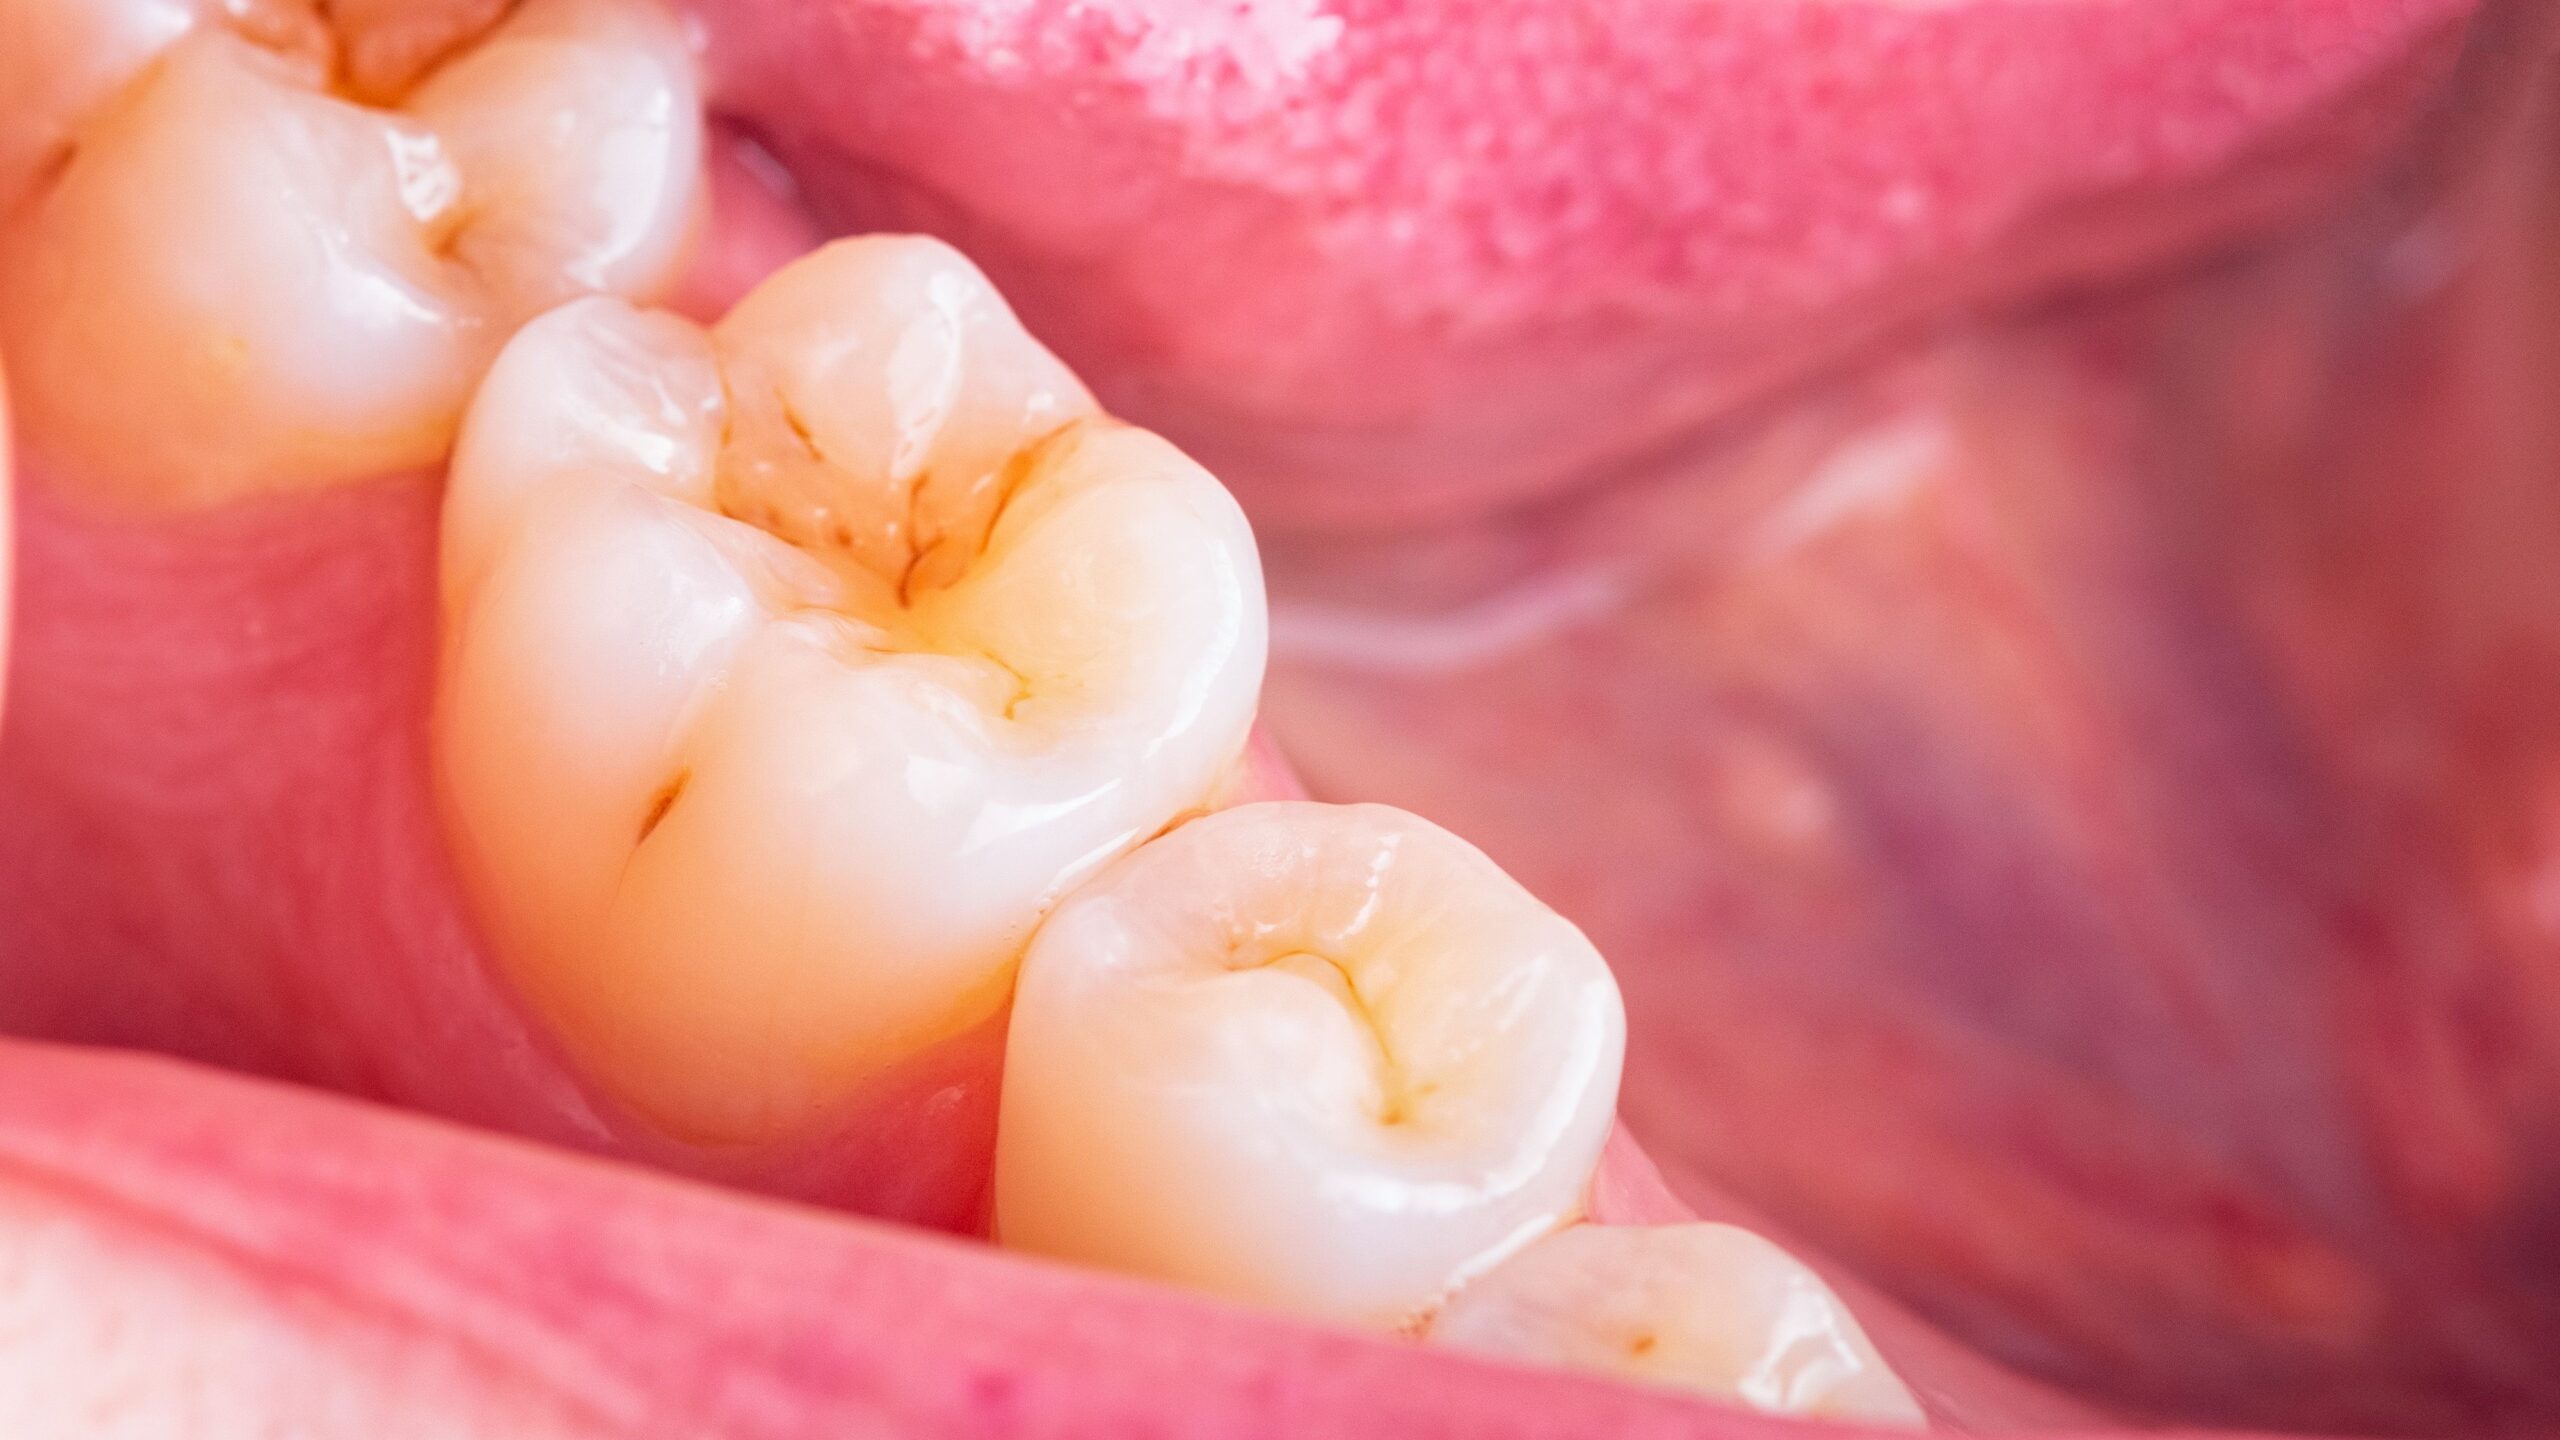 Decoding Dental Health: What Do Cavities Look Like? - US iDesk